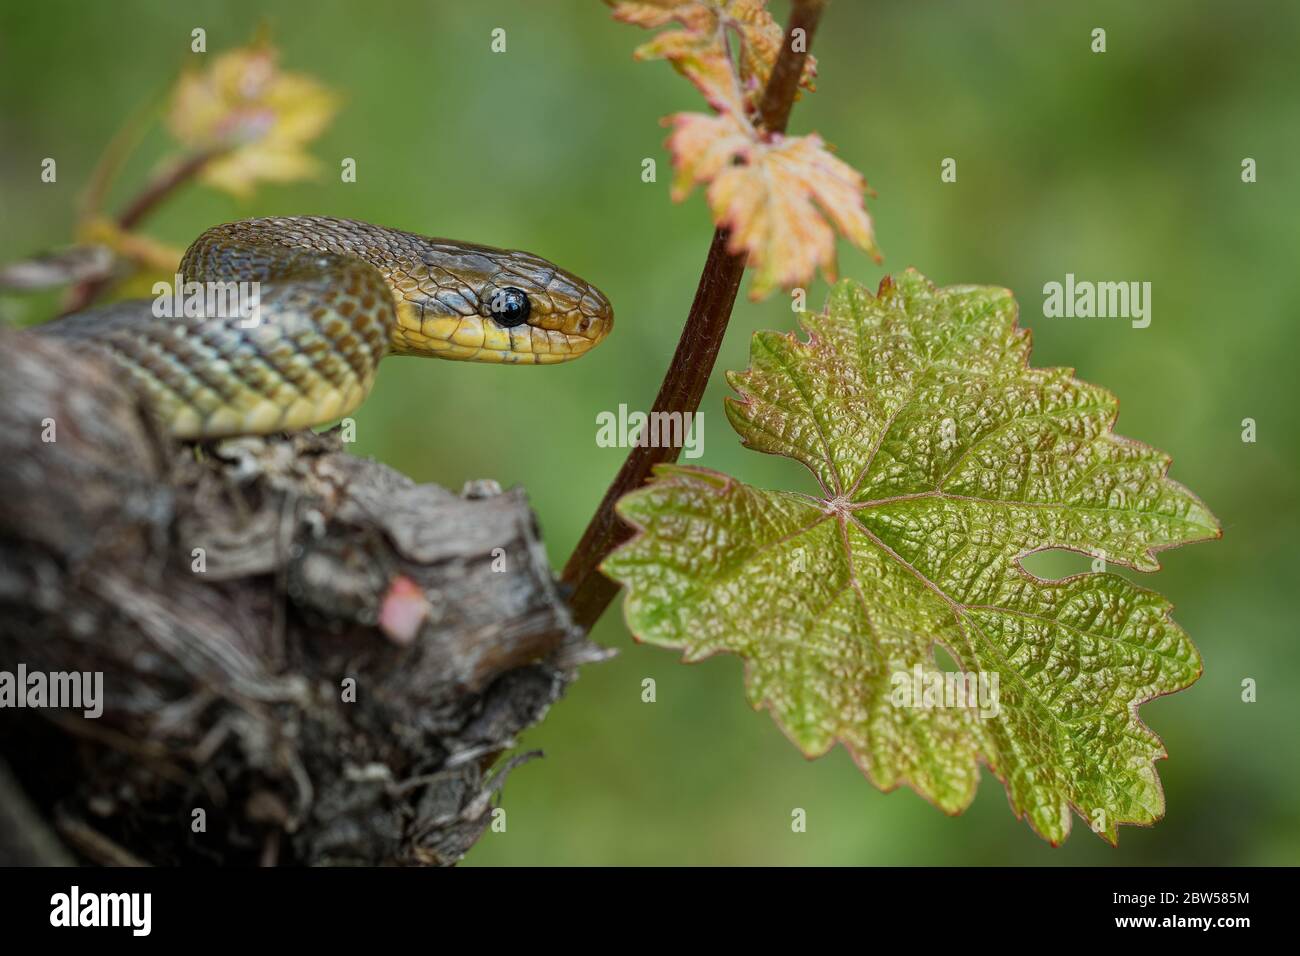 Serpiente Aesculapian - Zamenis longissimus, Elaphe longissima, serpiente verde oliva no venenosa y amarilla nativa de Europa, subfamilia de Colubrinae Foto de stock